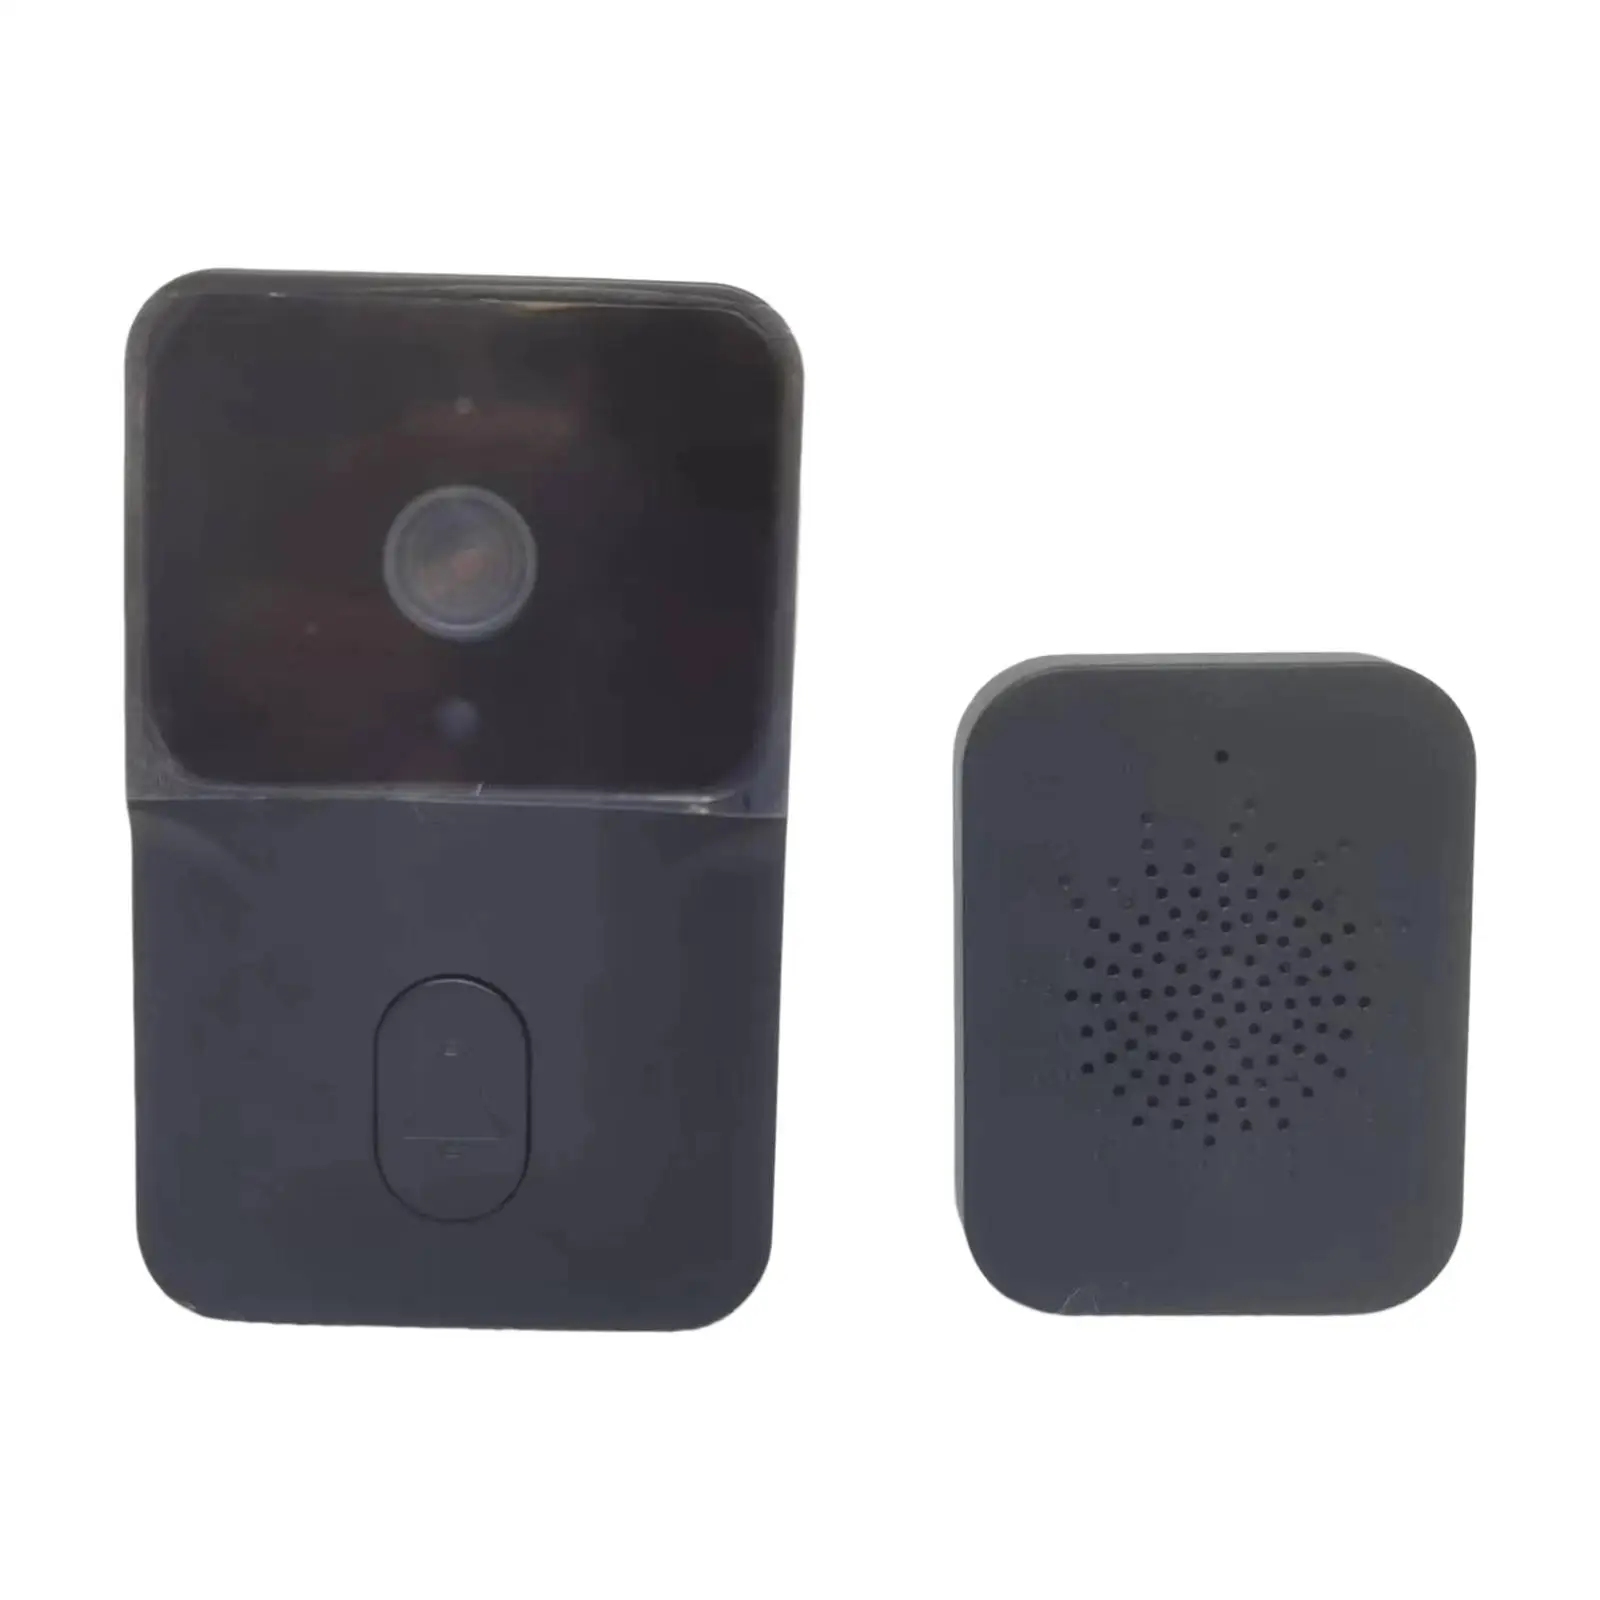 Wireless Doorbell Camera Real Time Video Two Way Audio Easy Install Smart Doorbell for Classroom Playhouse Bedroom Office School